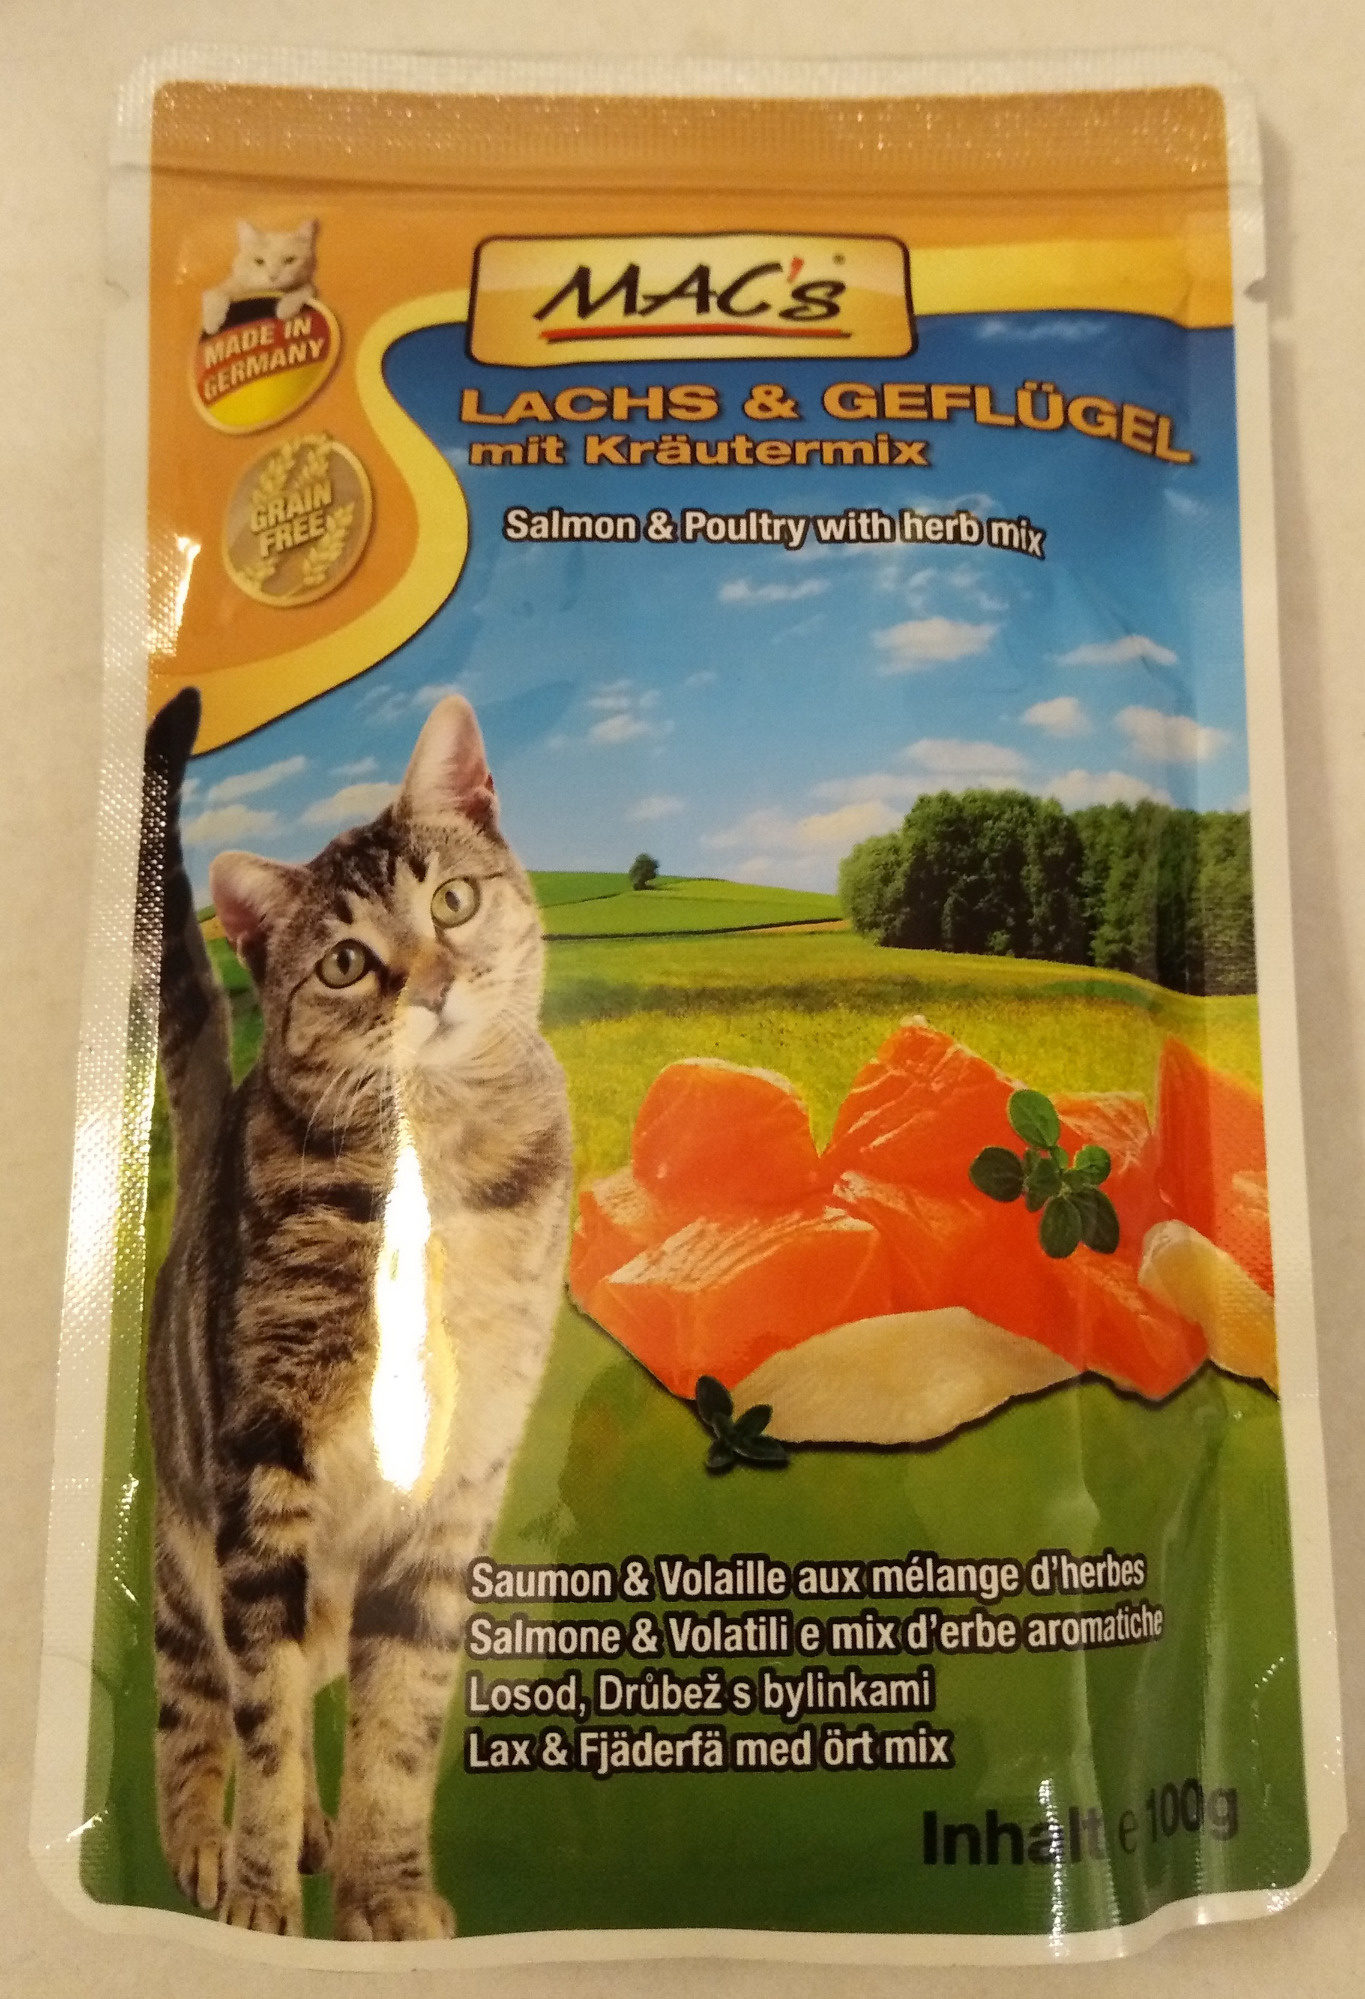 Lachs & Geflügel mit Kräutermix - Product - de